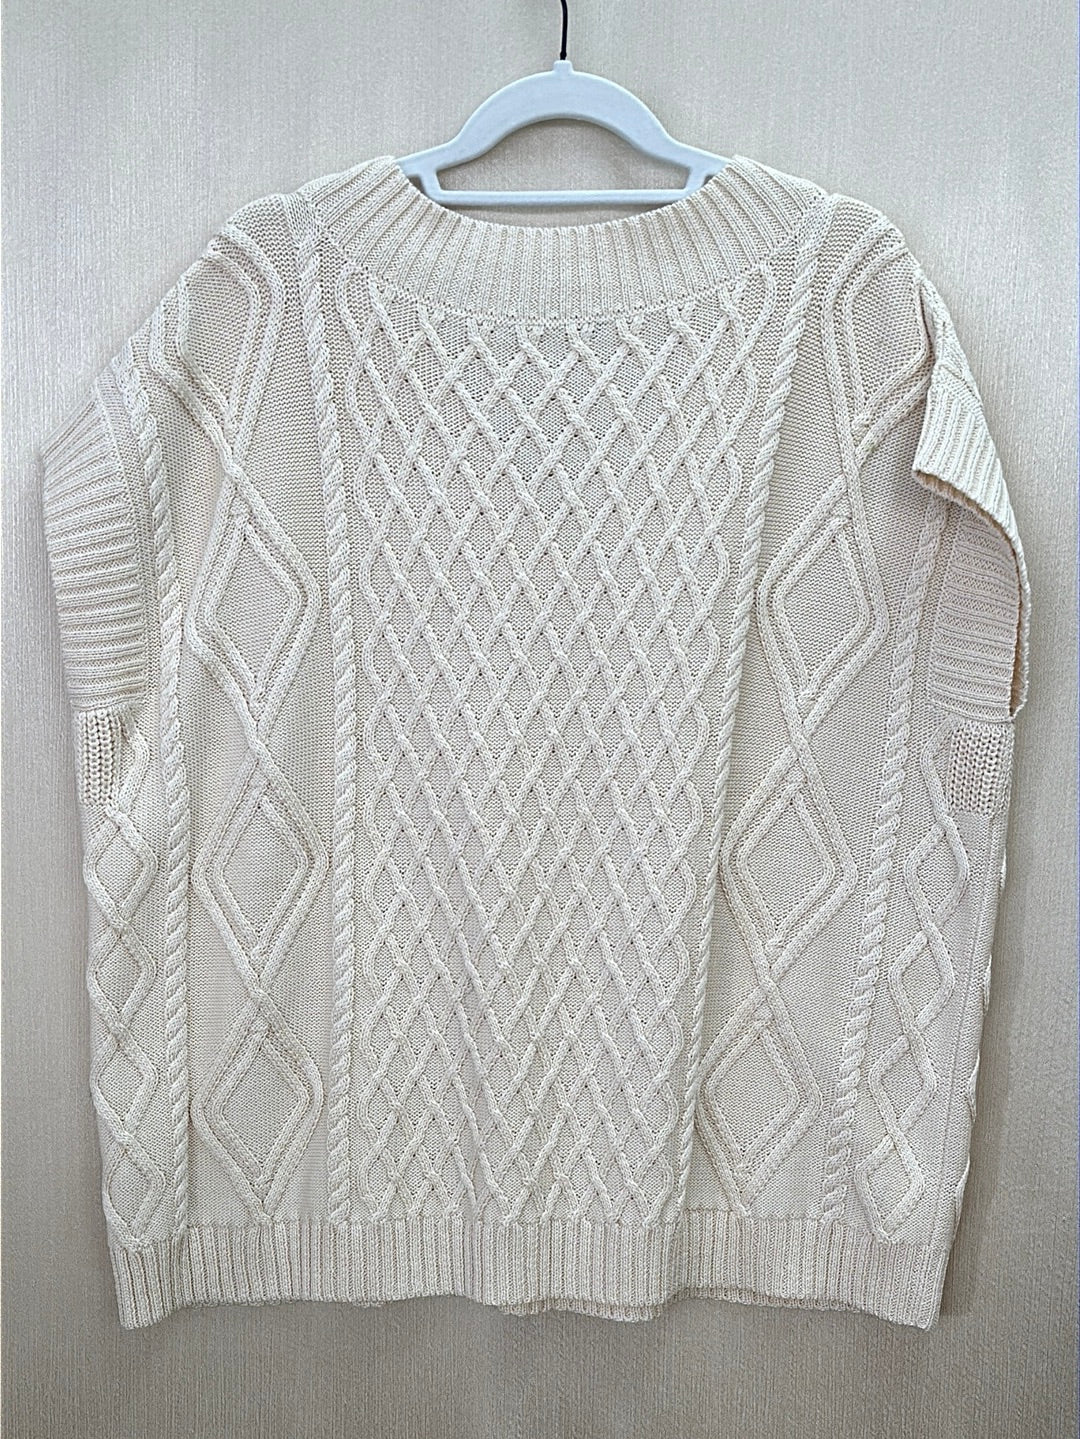 PERUVIAN CONNECTION cream parchment Osage Pullover Sweater - M/L